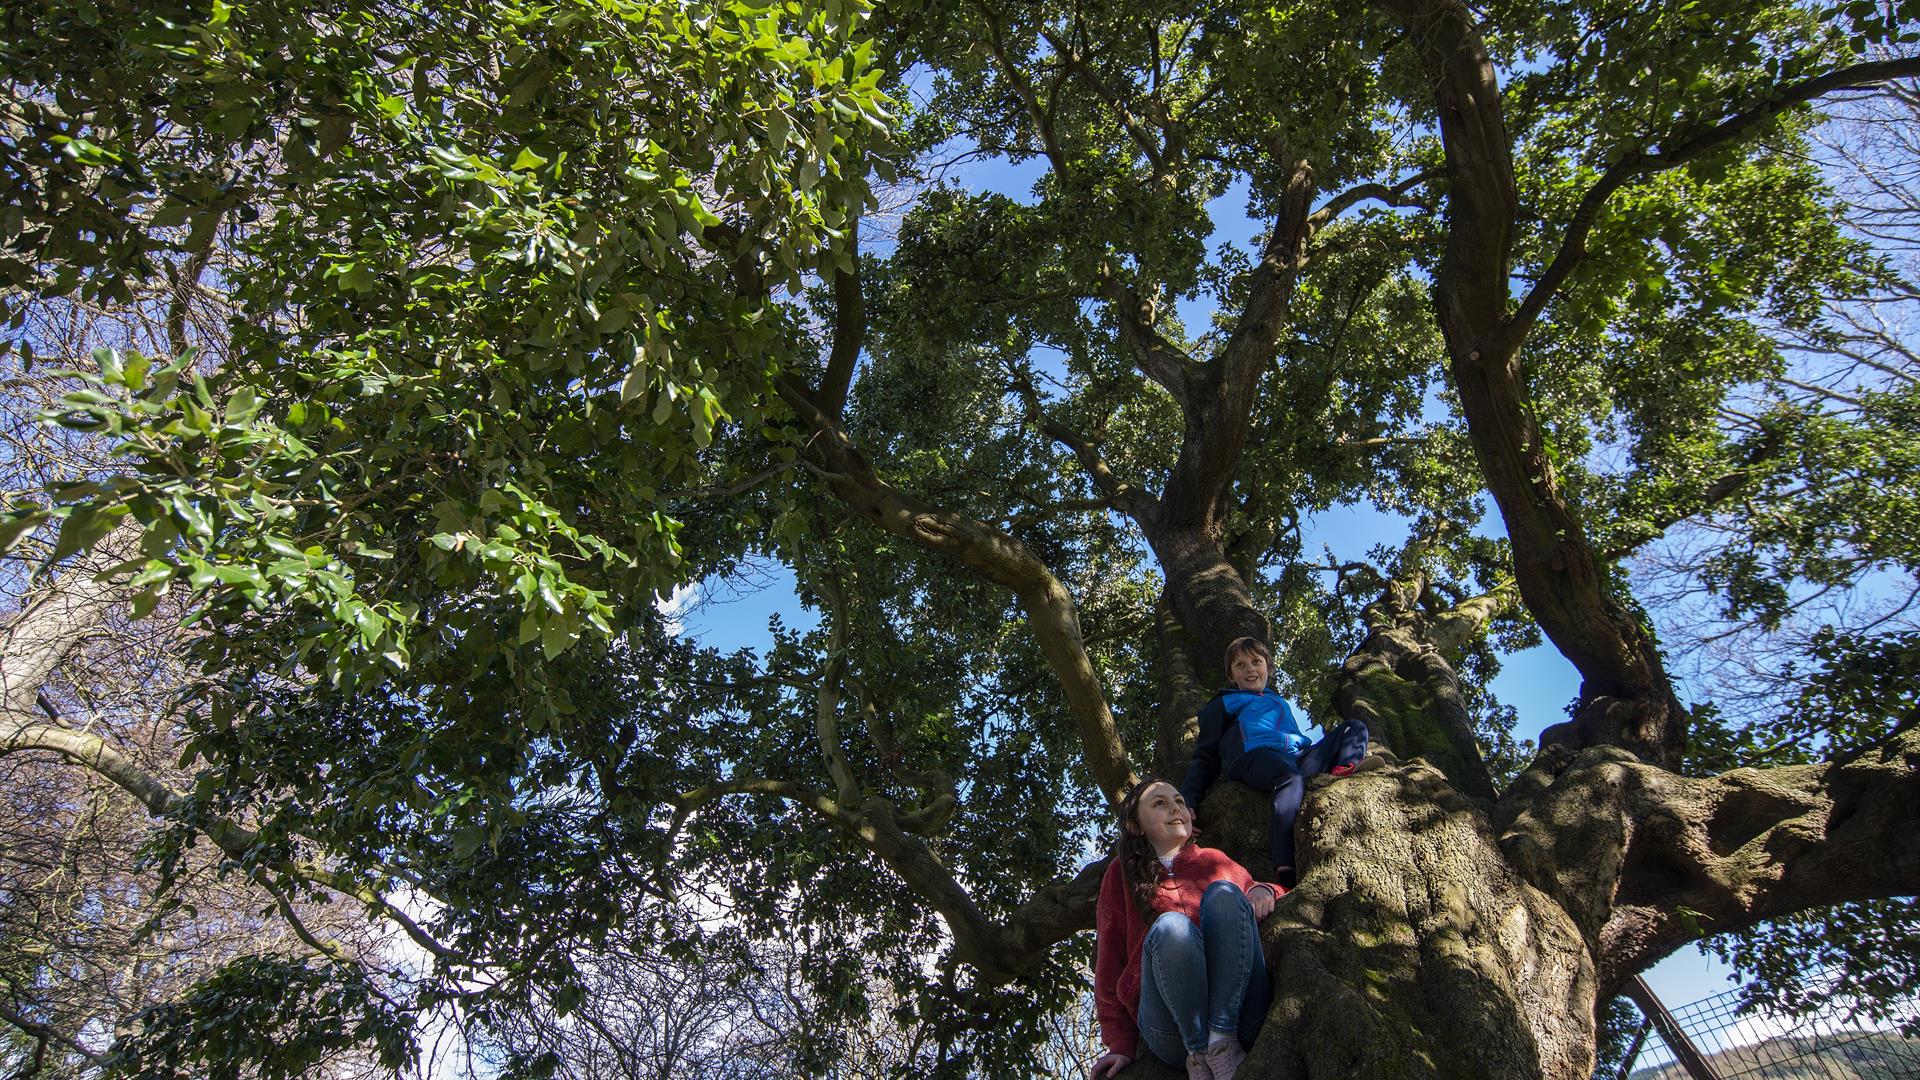 Children climbing on old homer, on the Tree Trail in Kilbroney Park